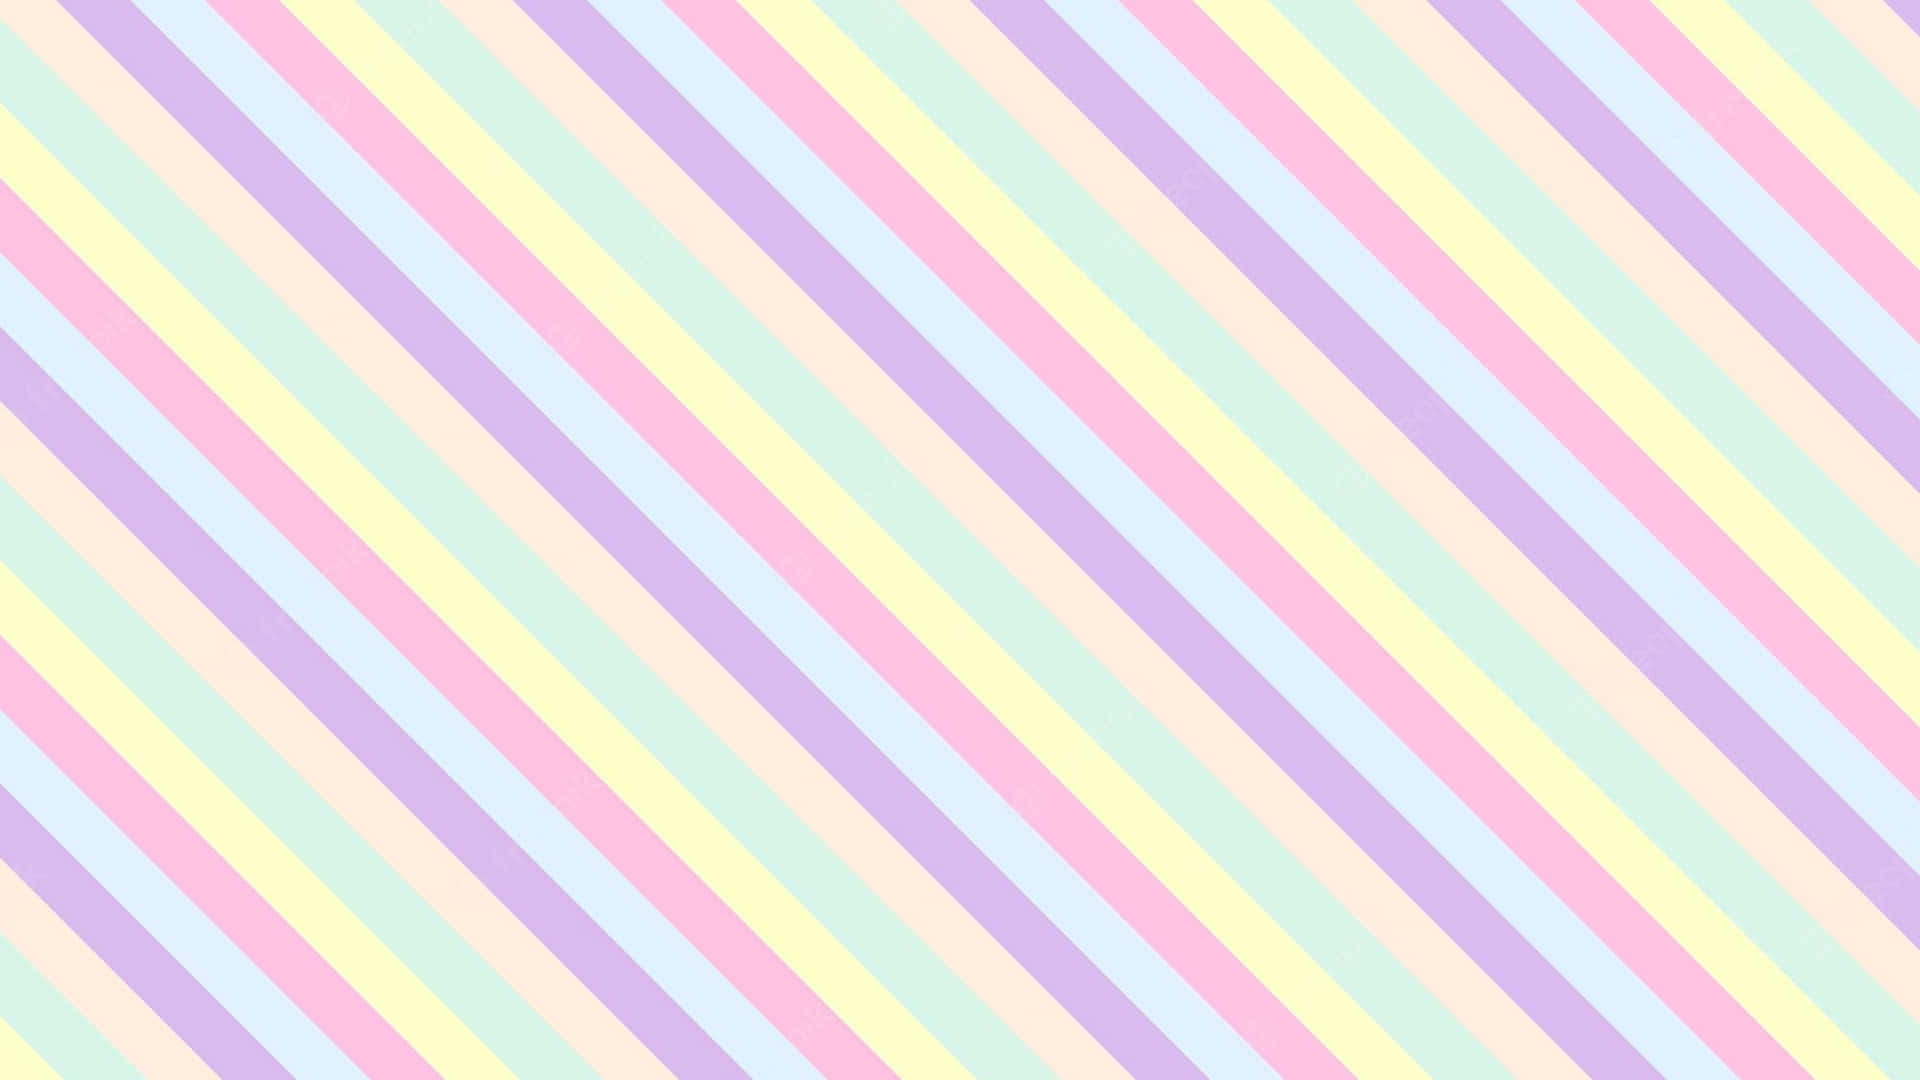 Aesthetic pastel striped design Wallpaper